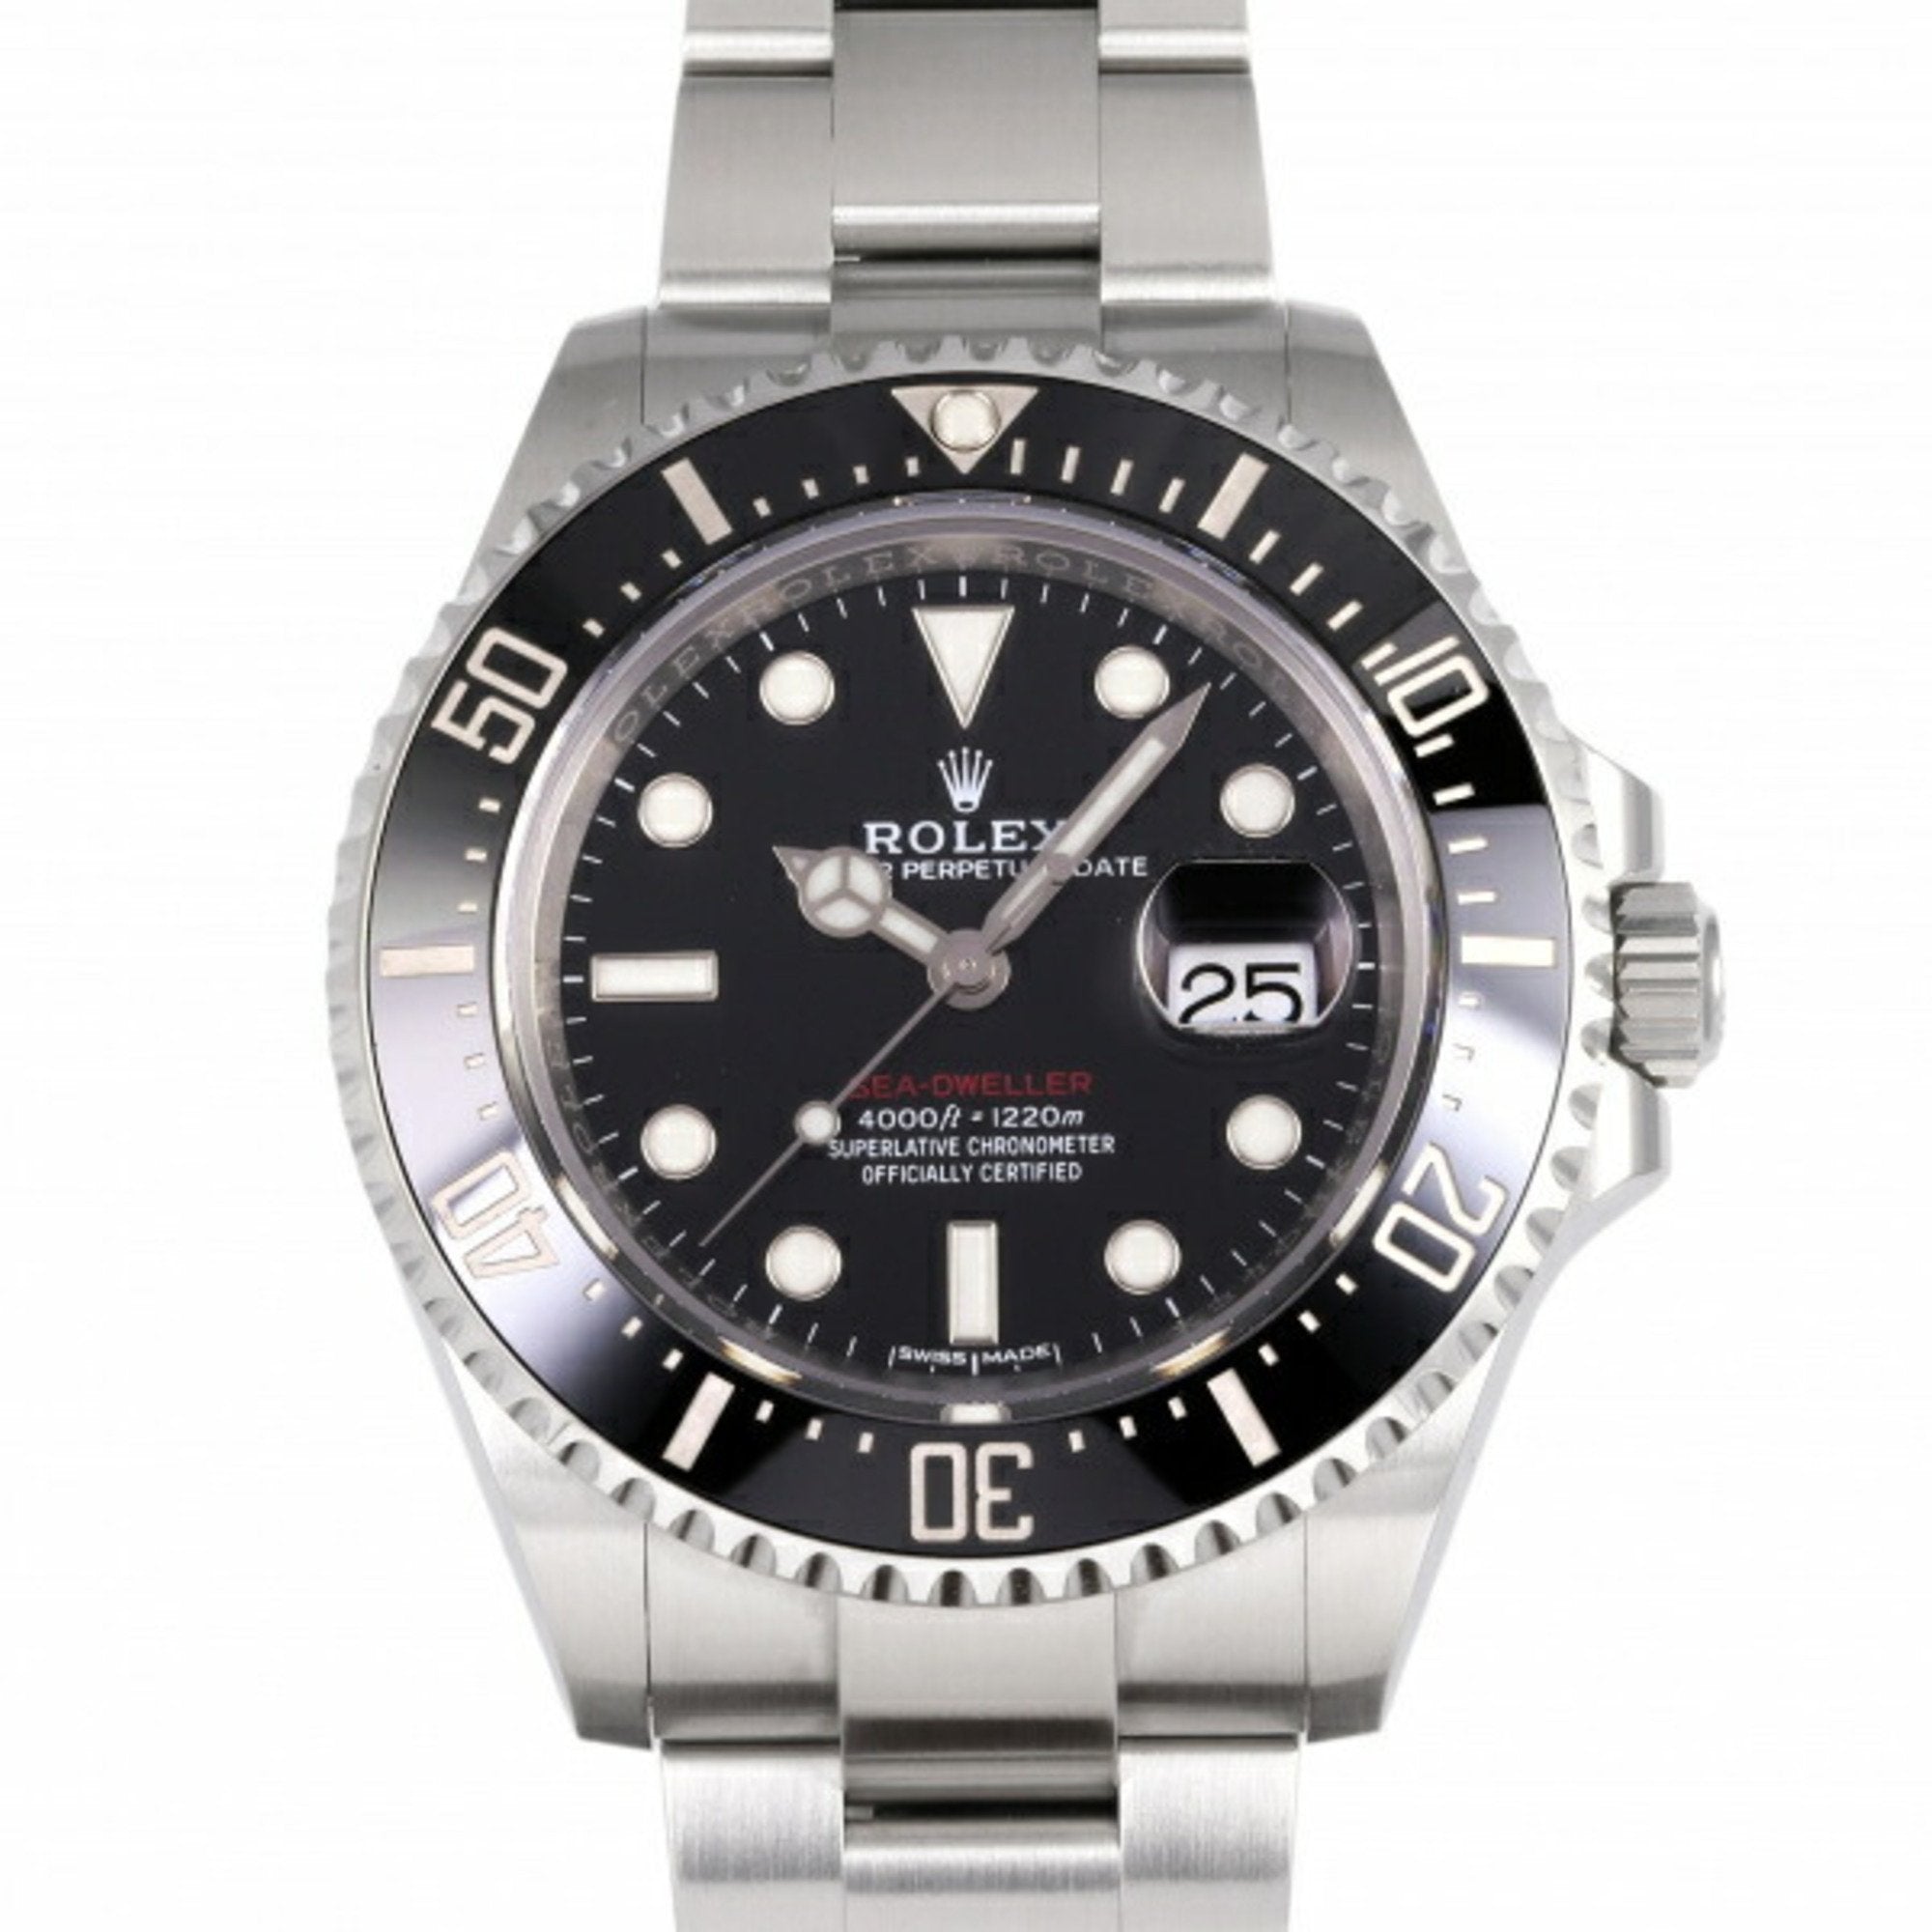 image of ROLEX sea dweller 126600 black dial watch men